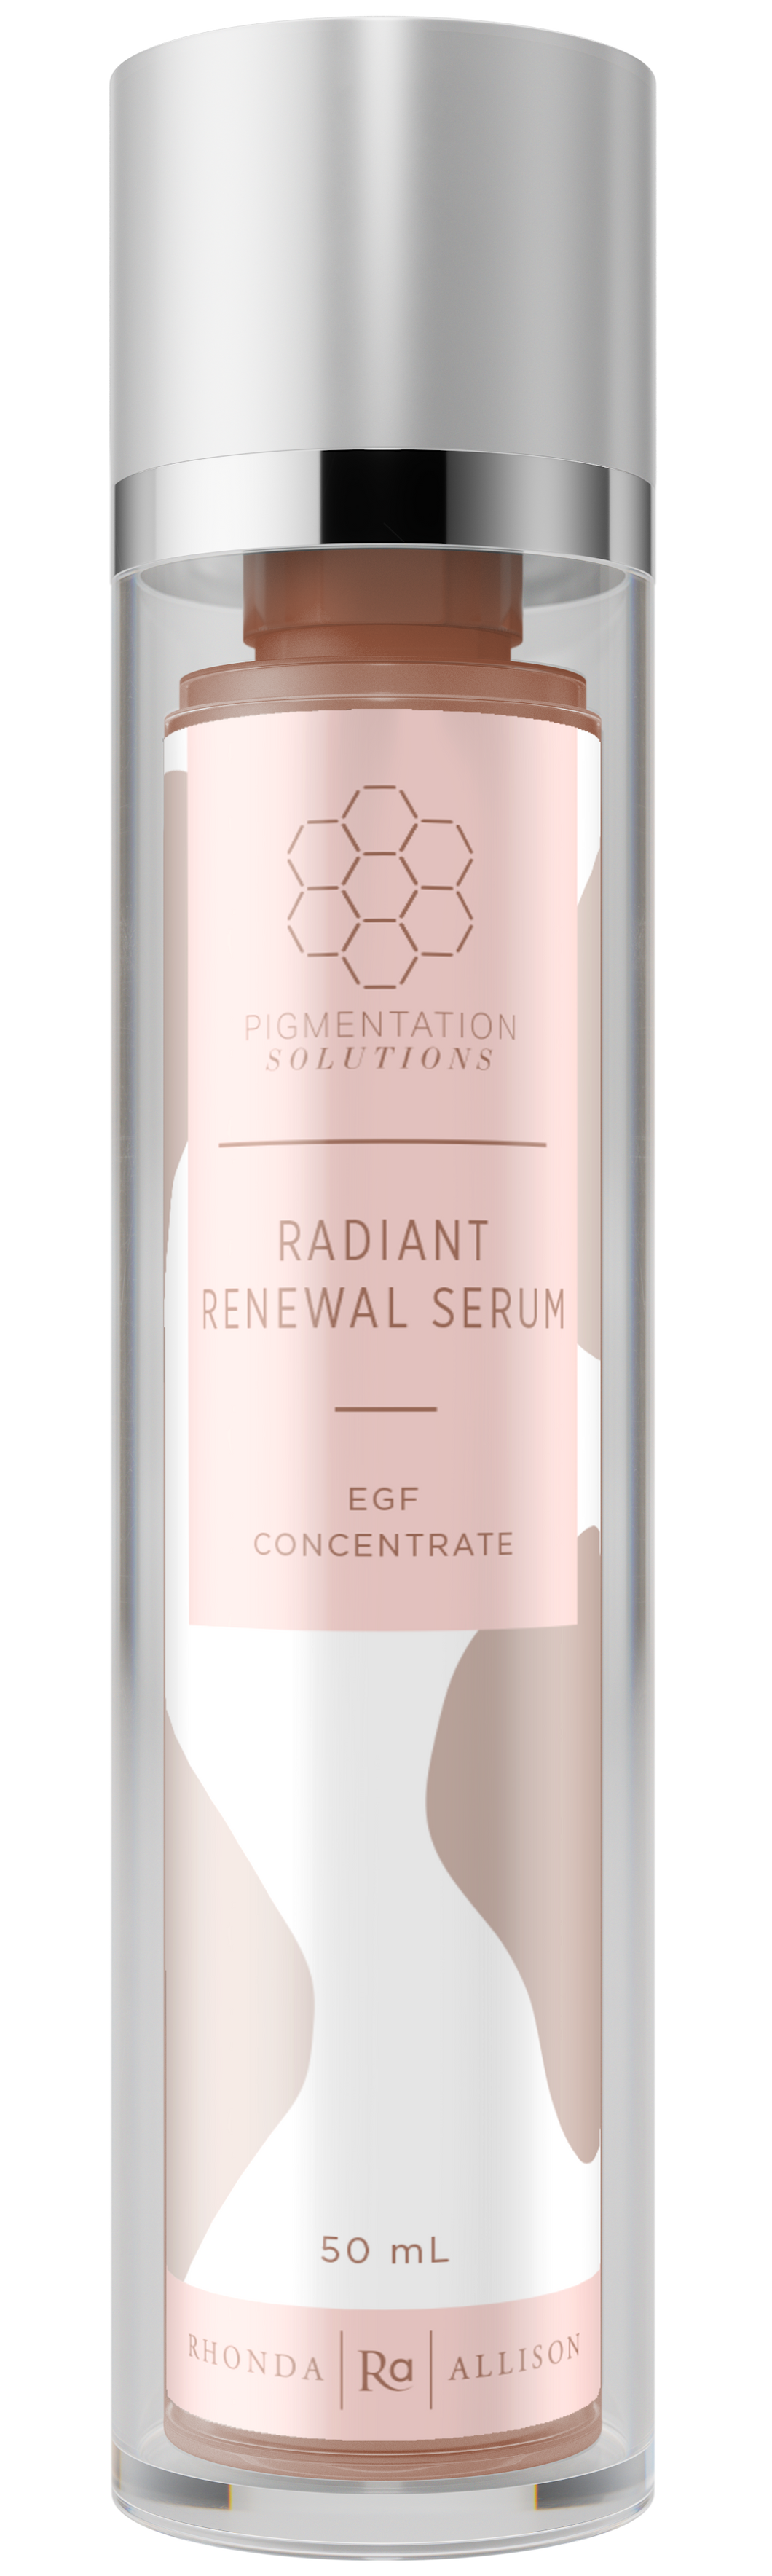 Radient Renewal Serum - 50 mL